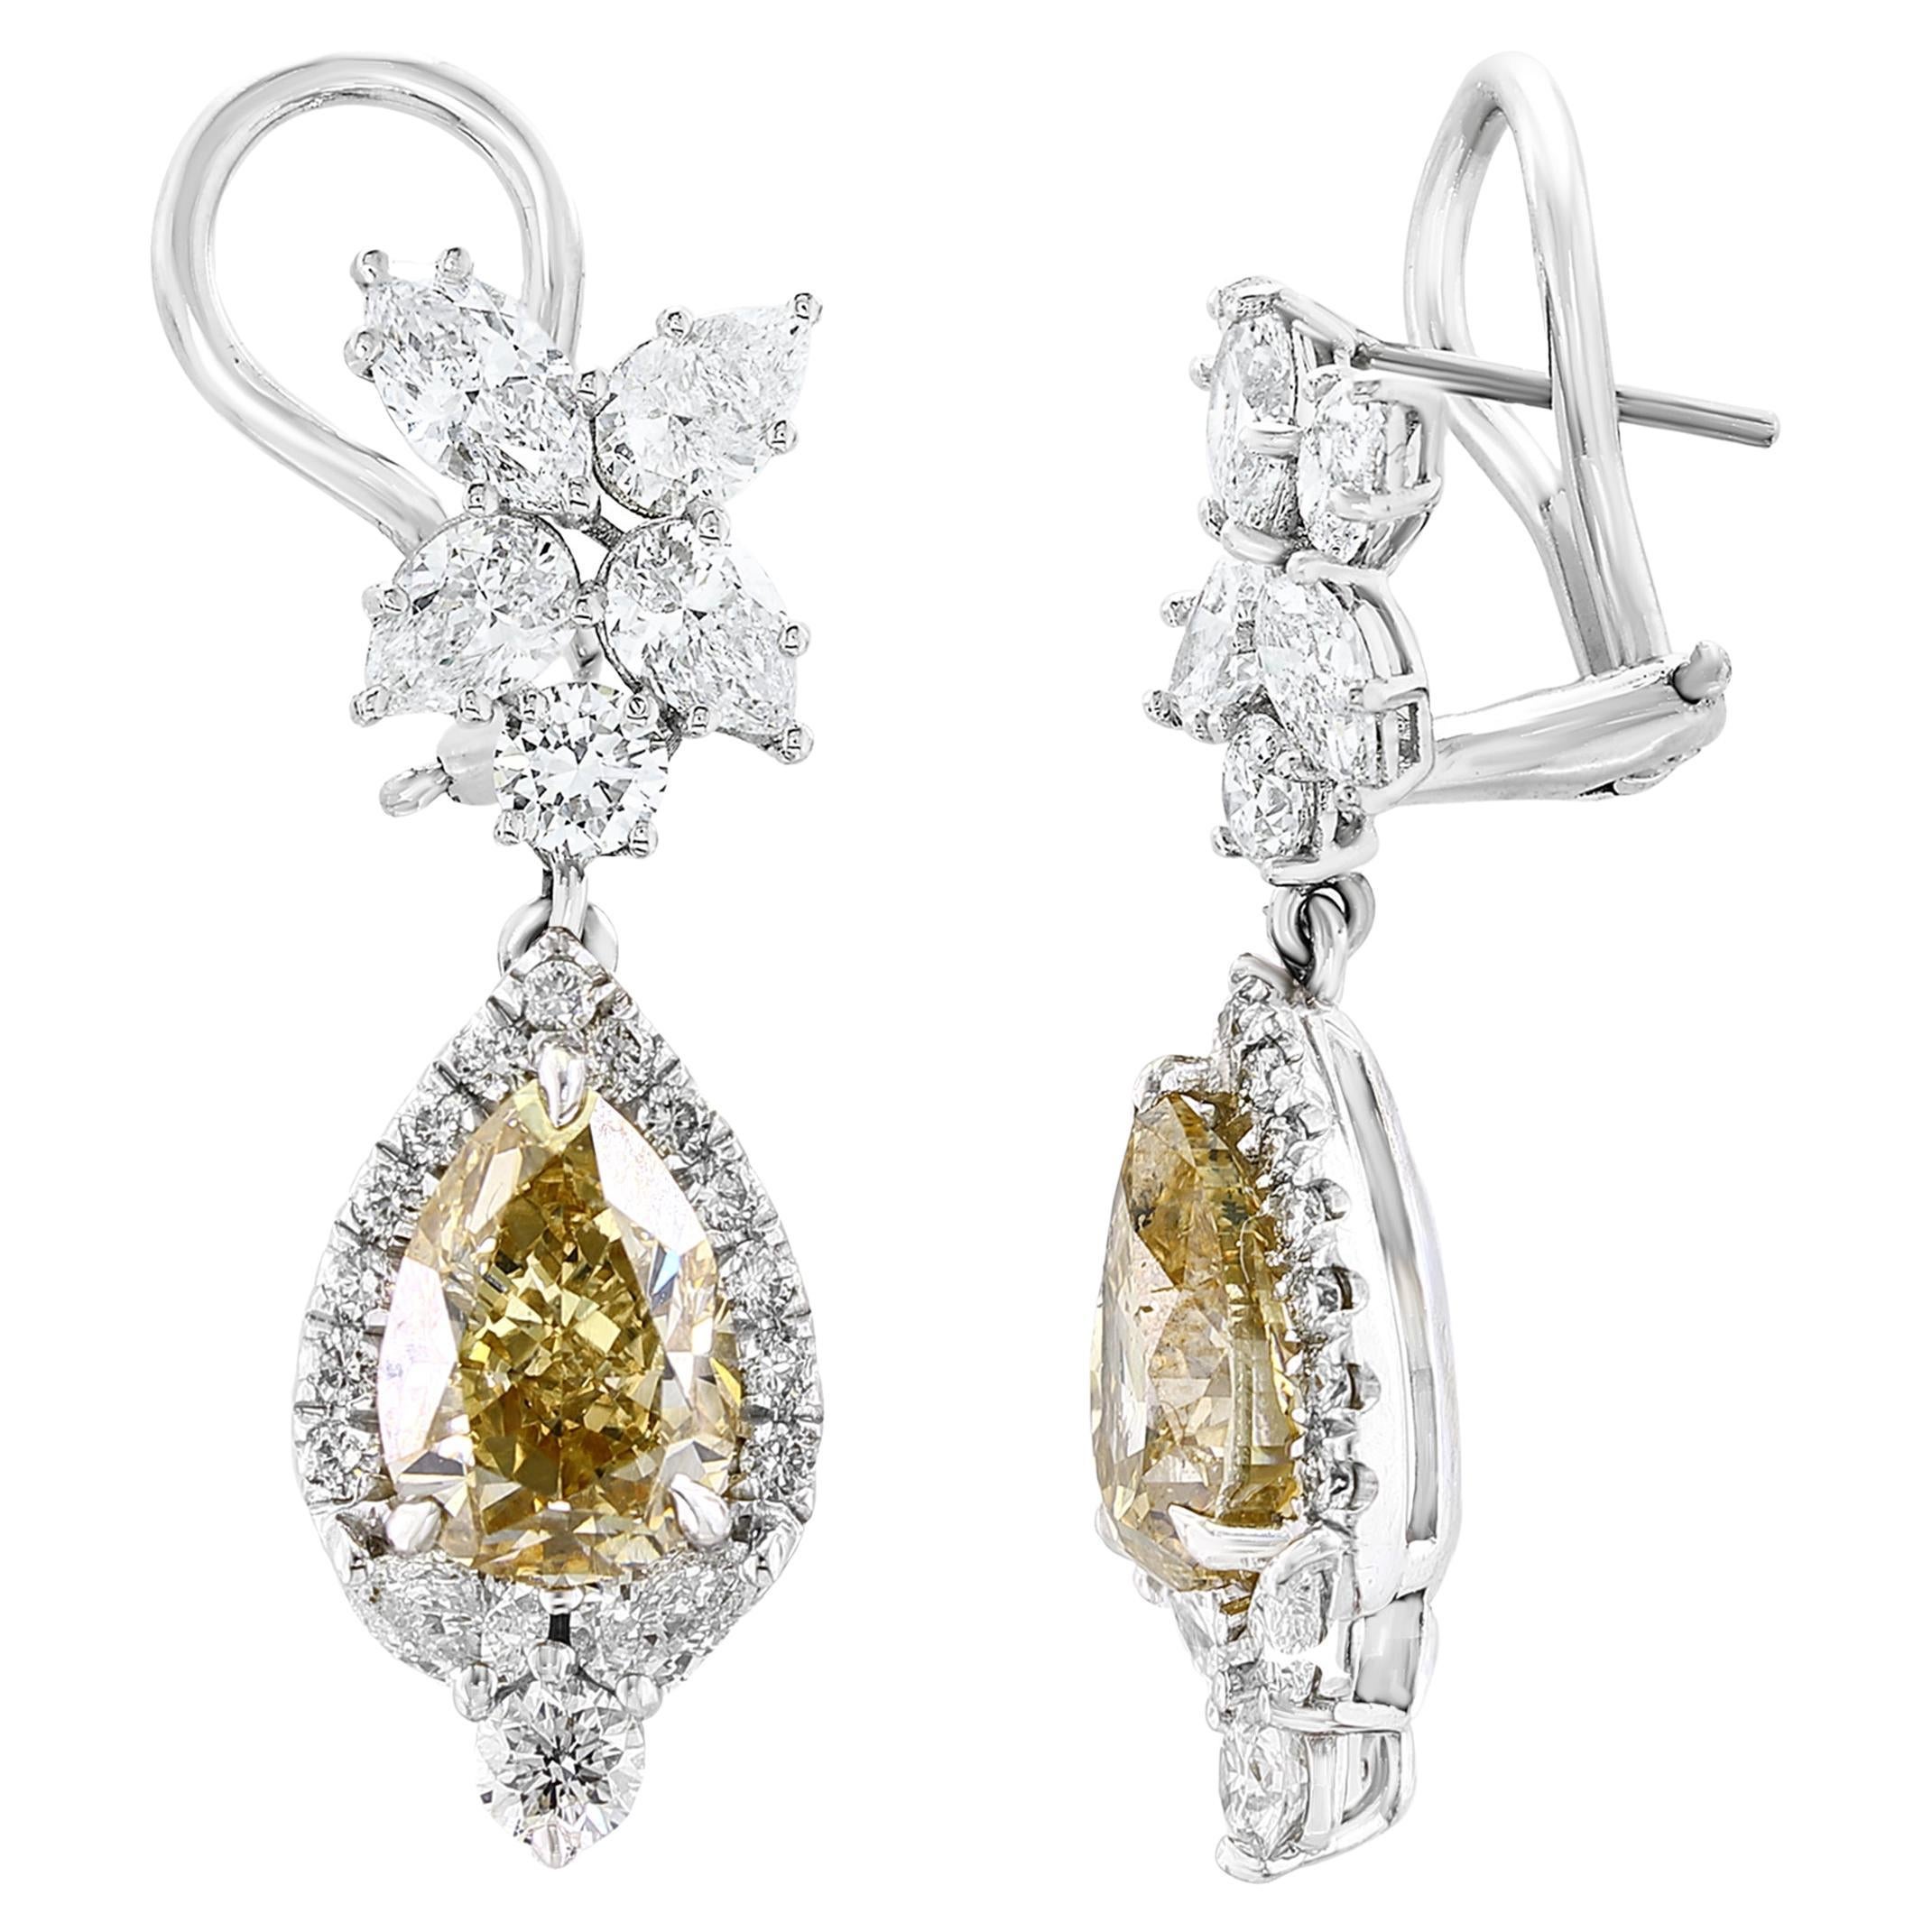 4.08 Carat Fancy Brown Diamond and Diamond Drop Earrings in 18K White Gold For Sale